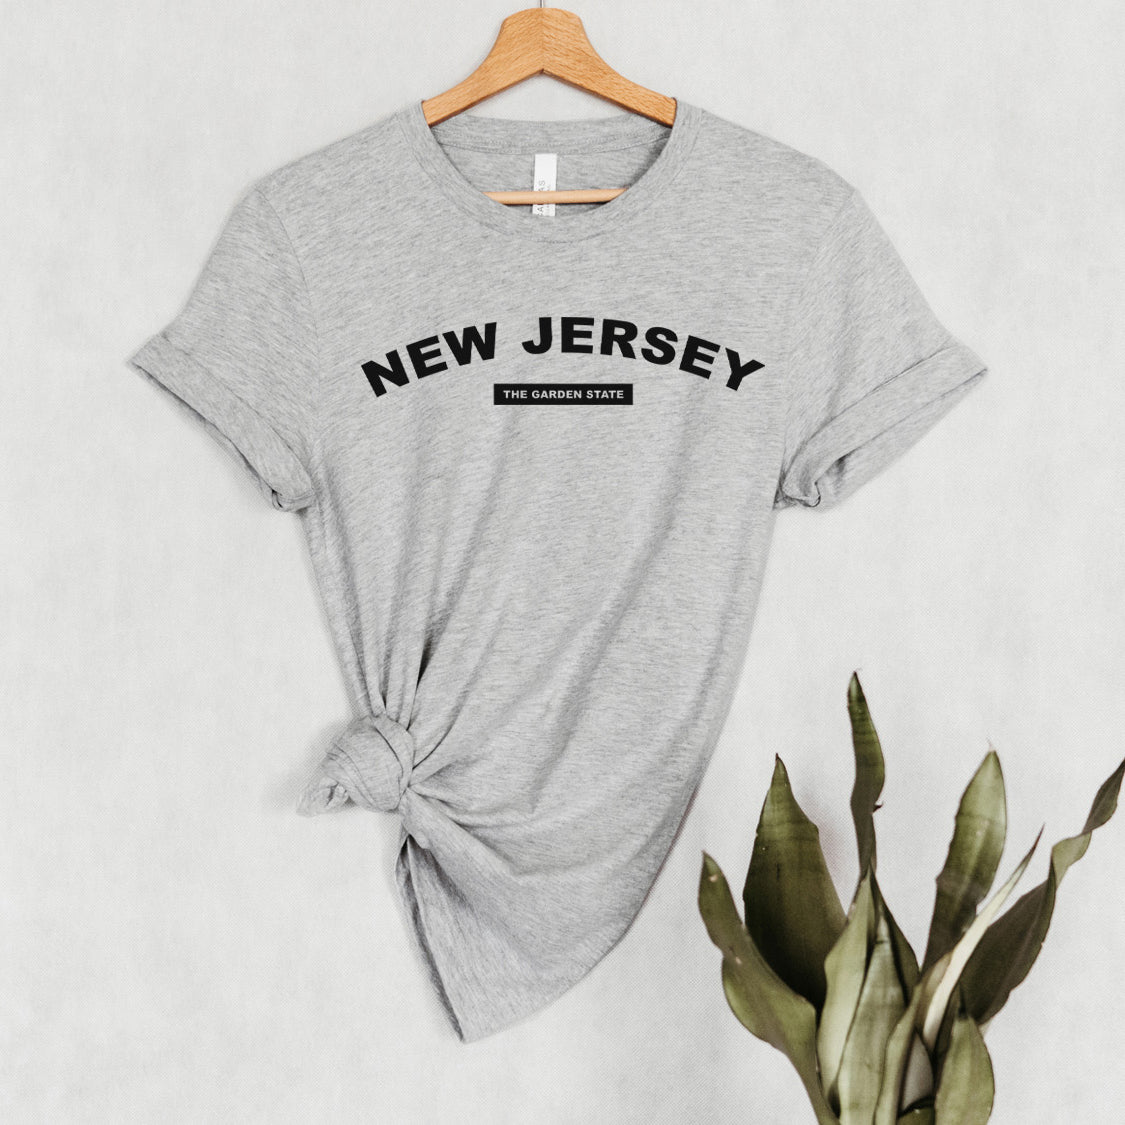 New Jersey The Garden State T-shirt - United States Name & Slogan Minimal Design Printed Tee Shirt